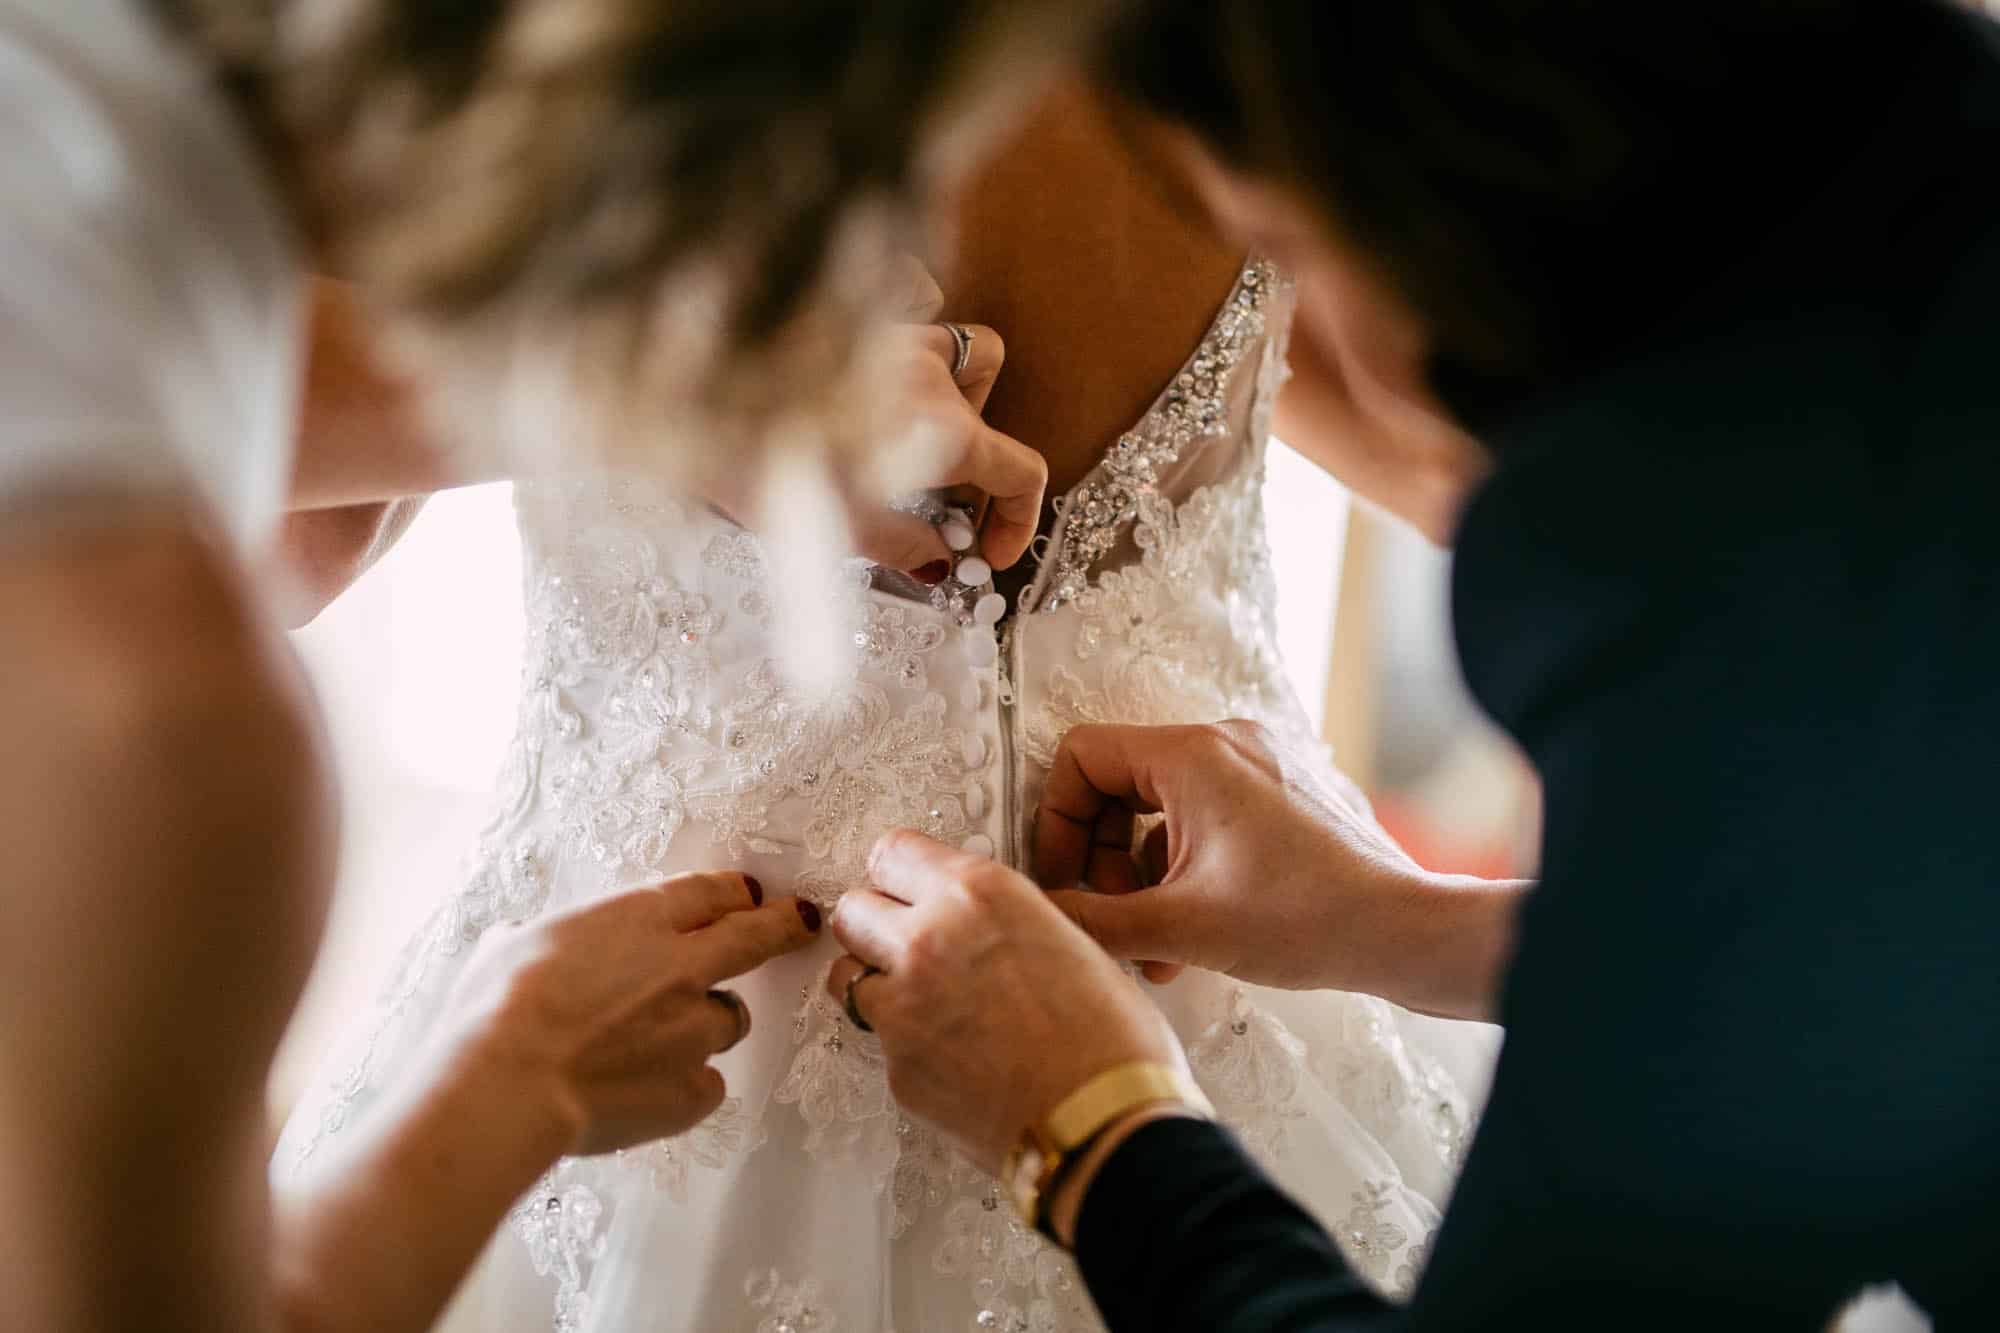 A woman carefully attaches a button to an A-line wedding dress.